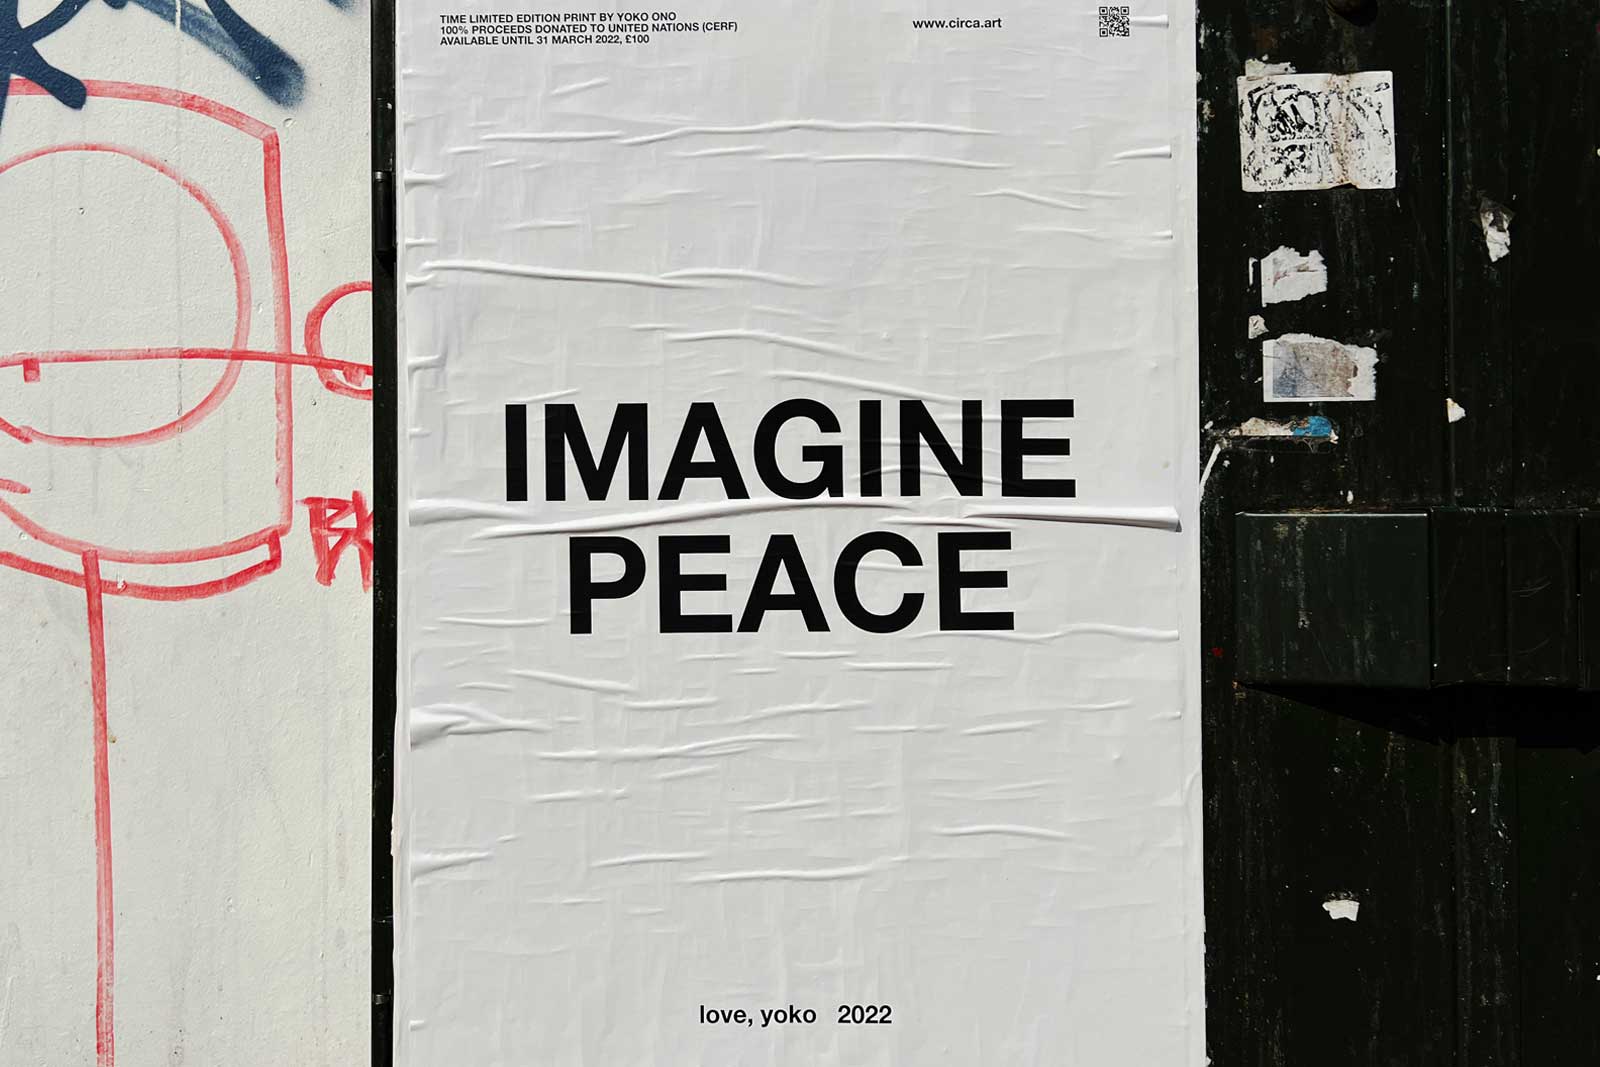 Yoko Ono wants you to IMAGINE PEACE